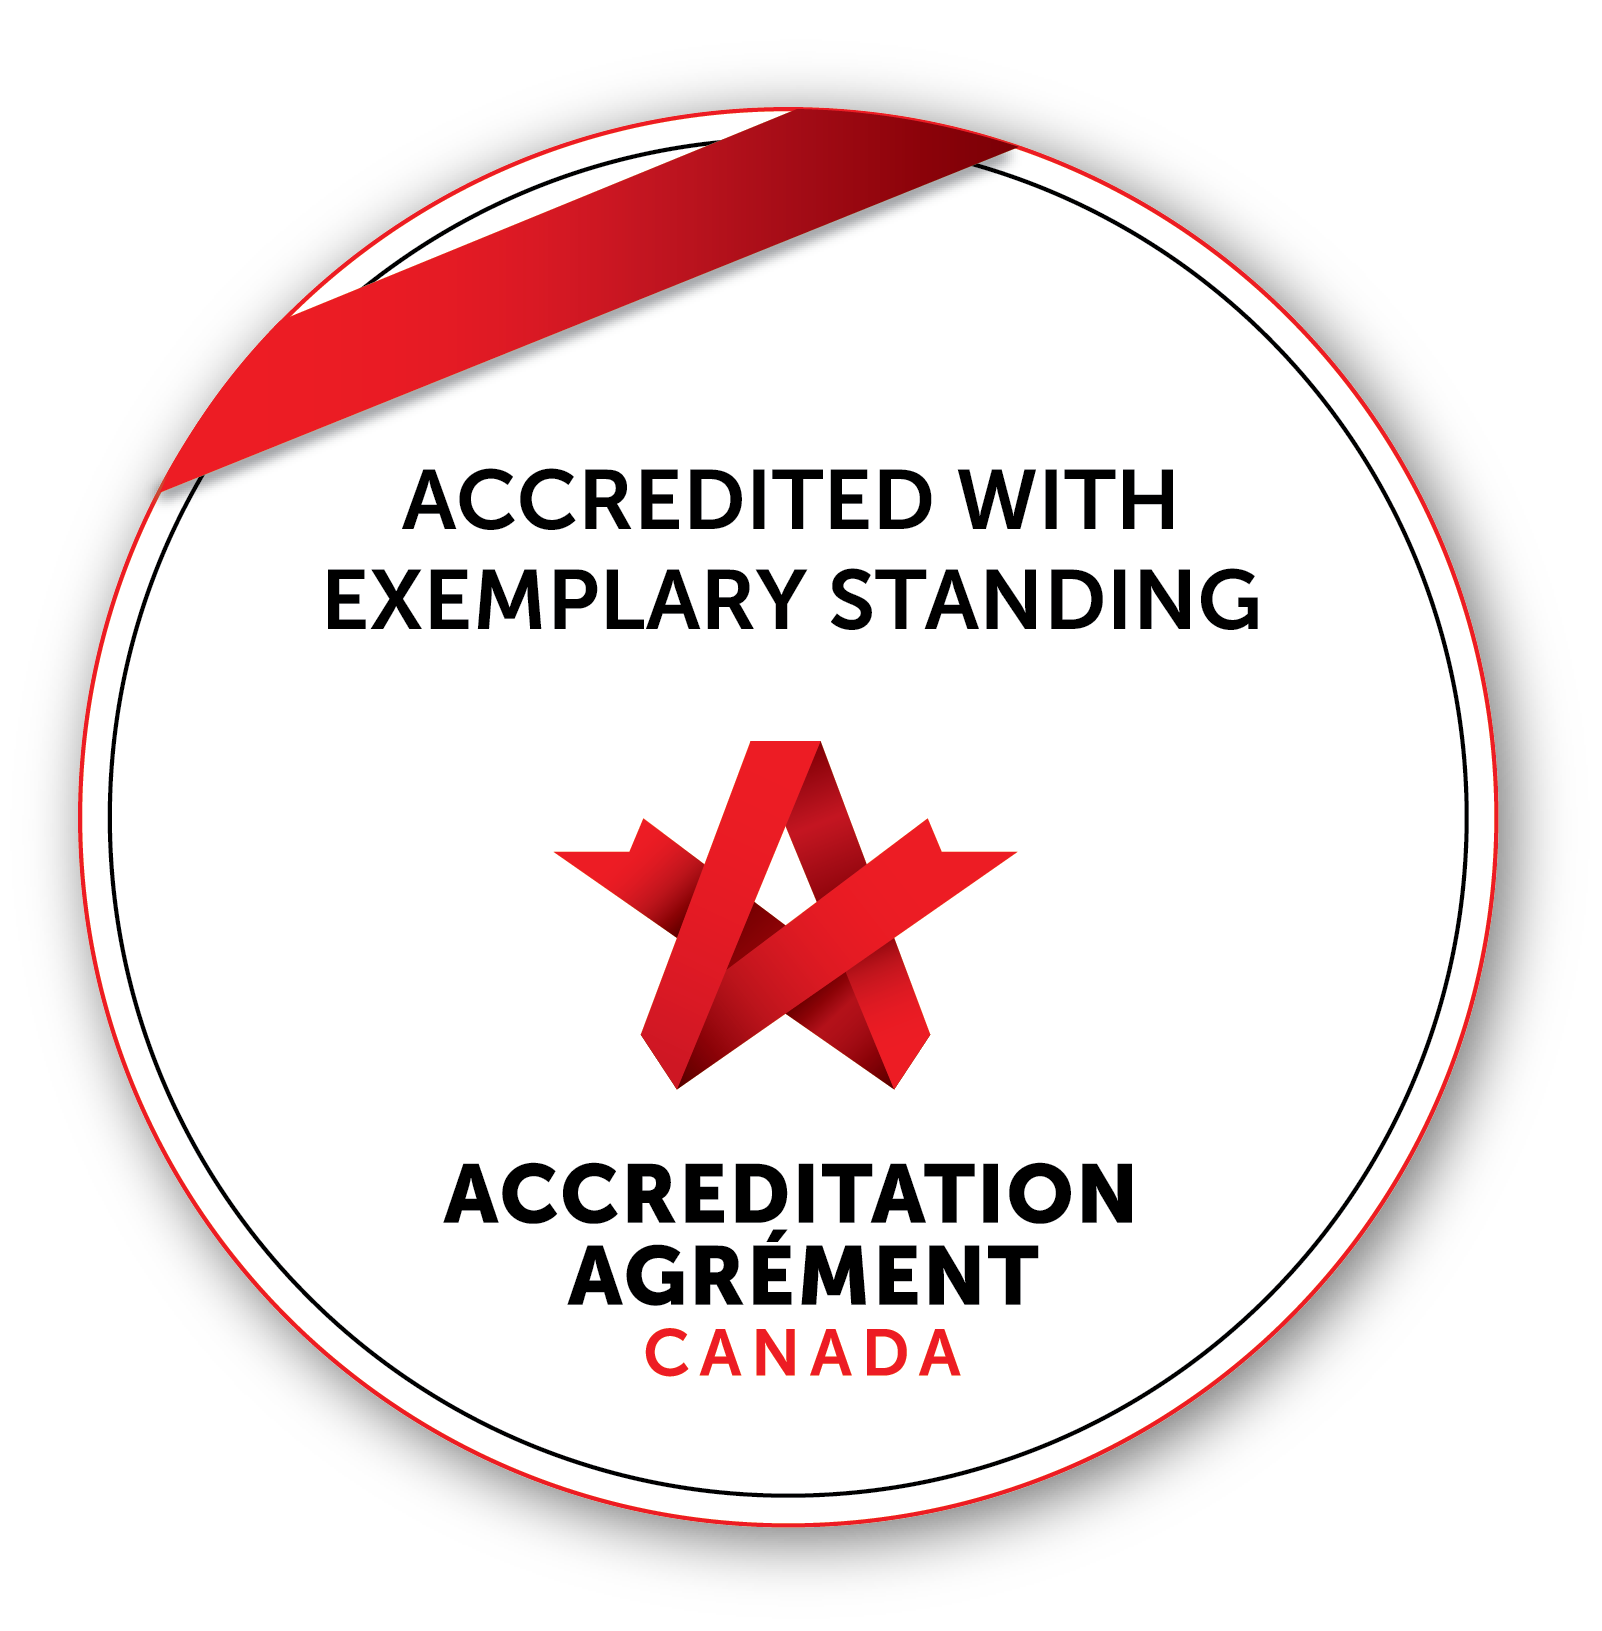 Accreditation Primer Award